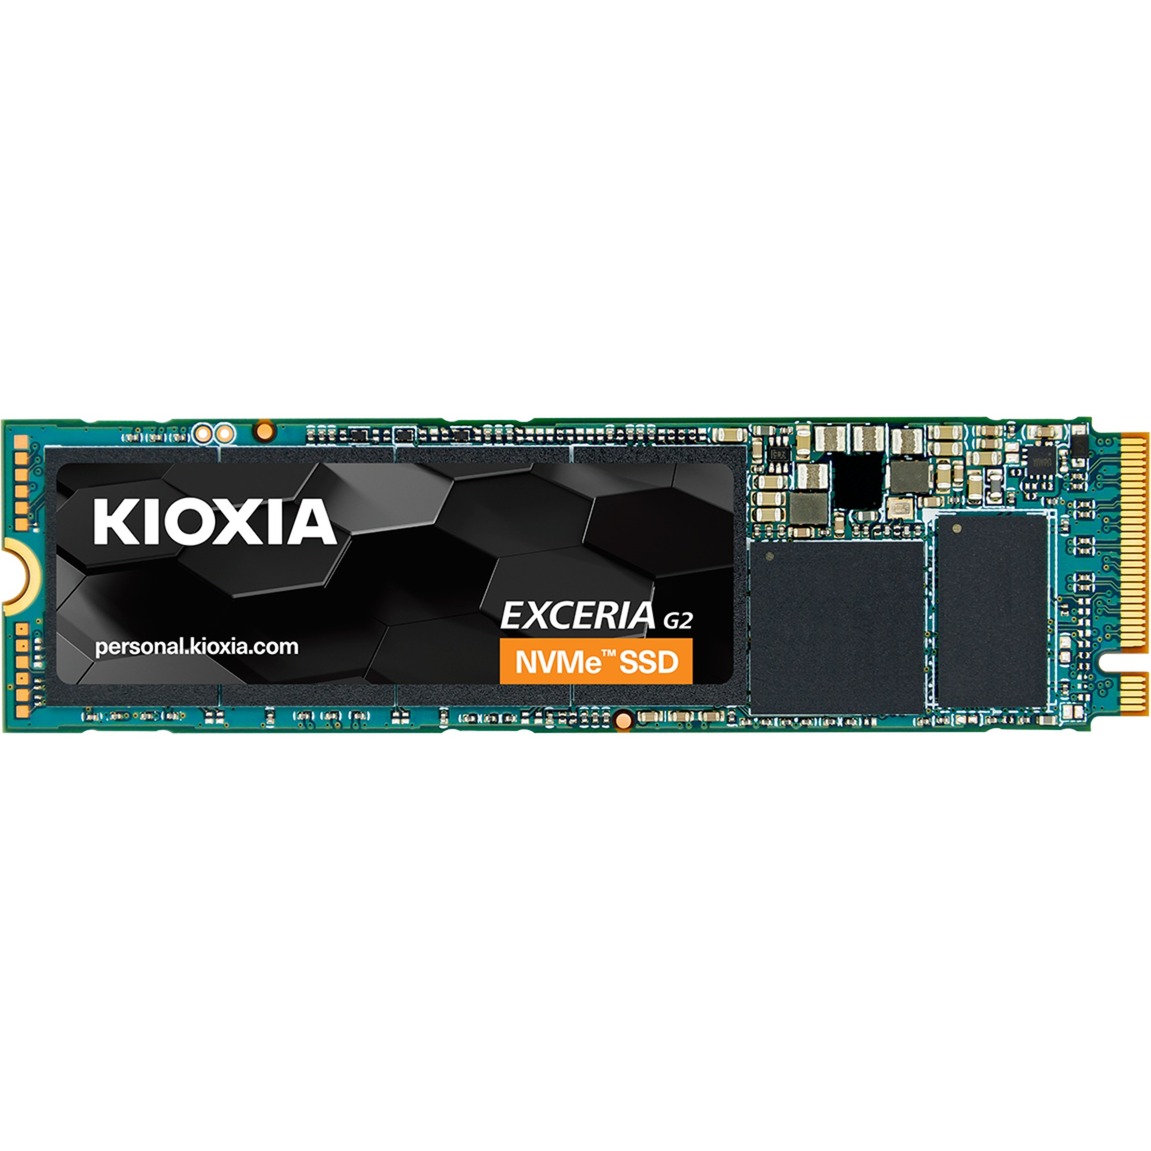 Exceria G2 500 GB, SSD von Kioxia